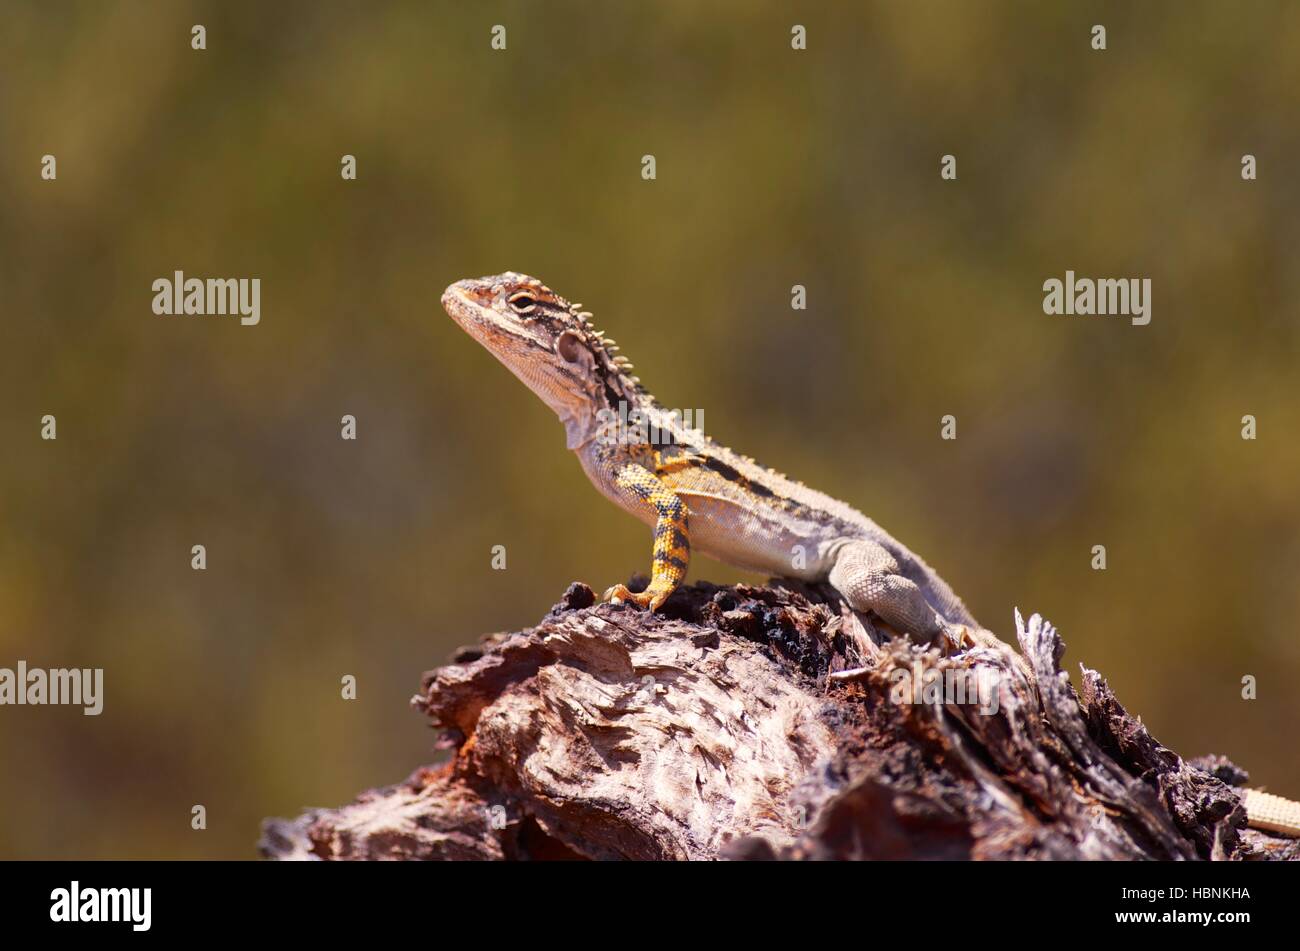 A Crested Dragon (Ctenophorus cristatus) perched on a stump near Nilginee, South Australia Stock Photo